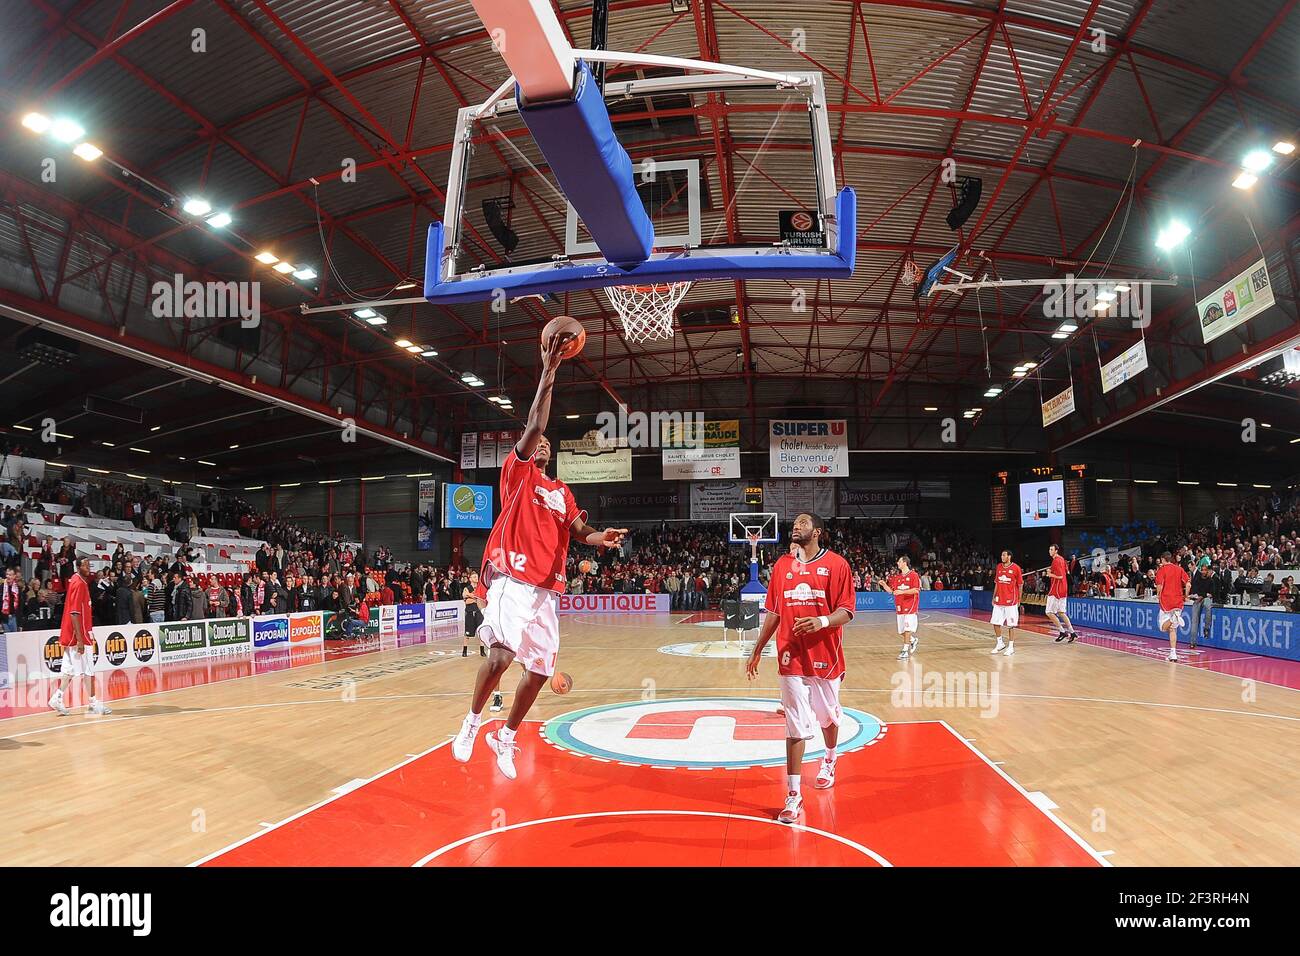 Besiktas JK v Cholet Basket, Full Basketball Game